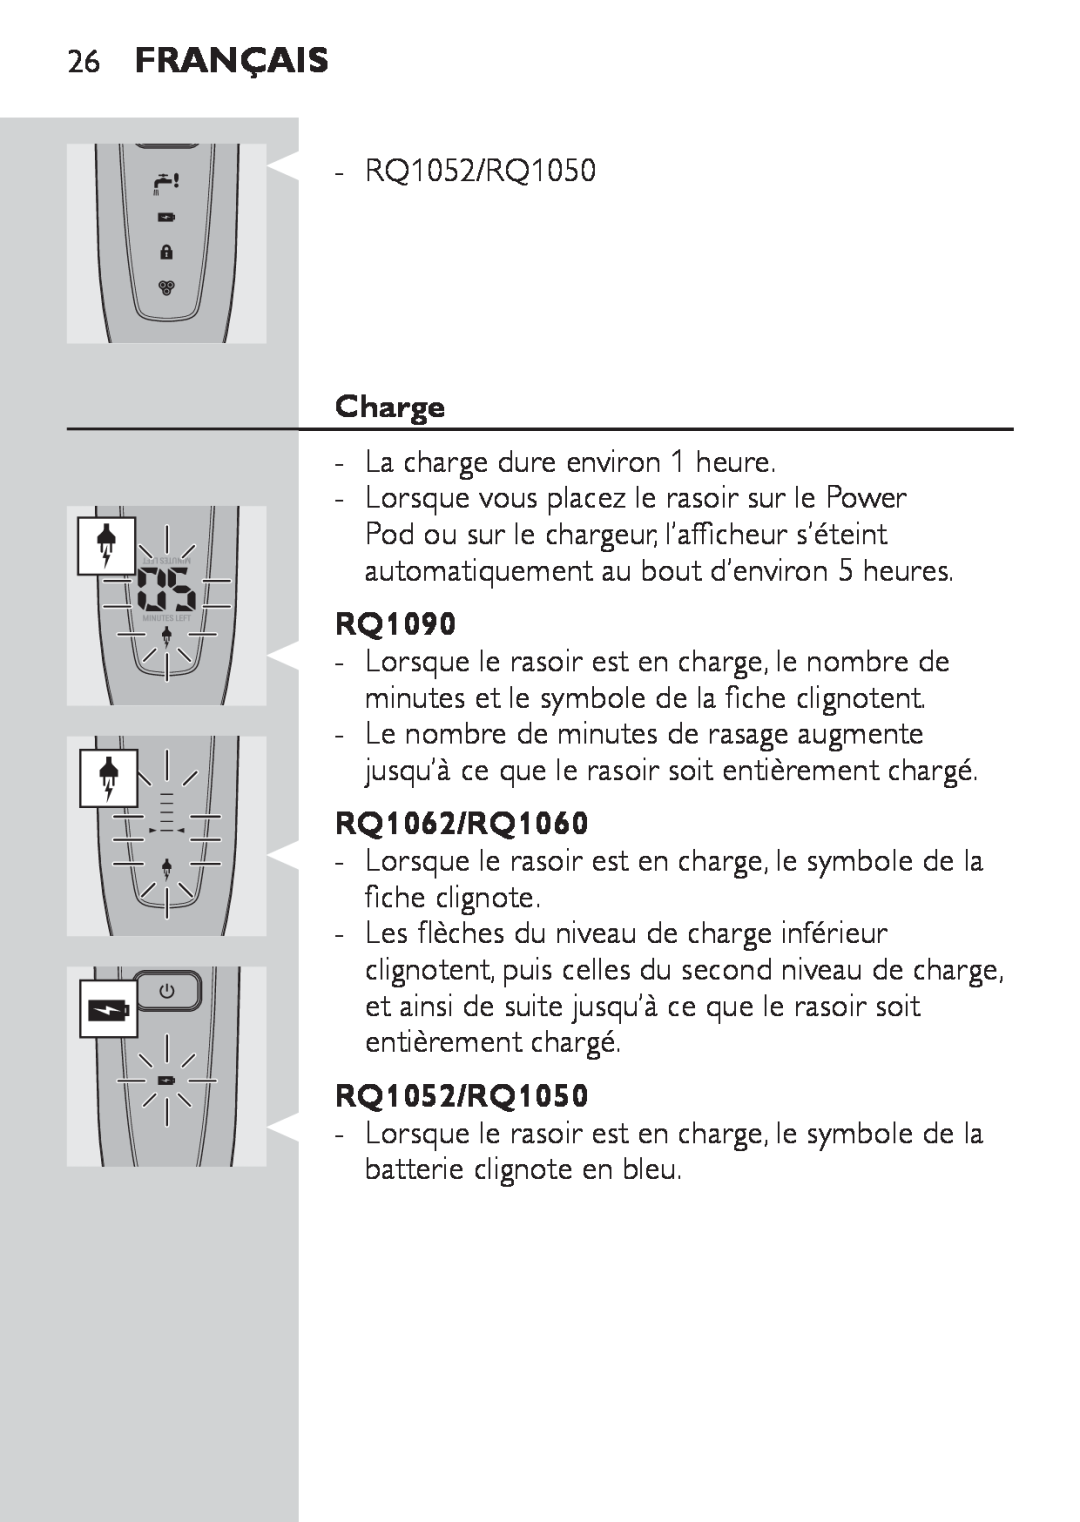 Philips manual Français, Charge, RQ1090, RQ1062/RQ1060, RQ1052/RQ1050 